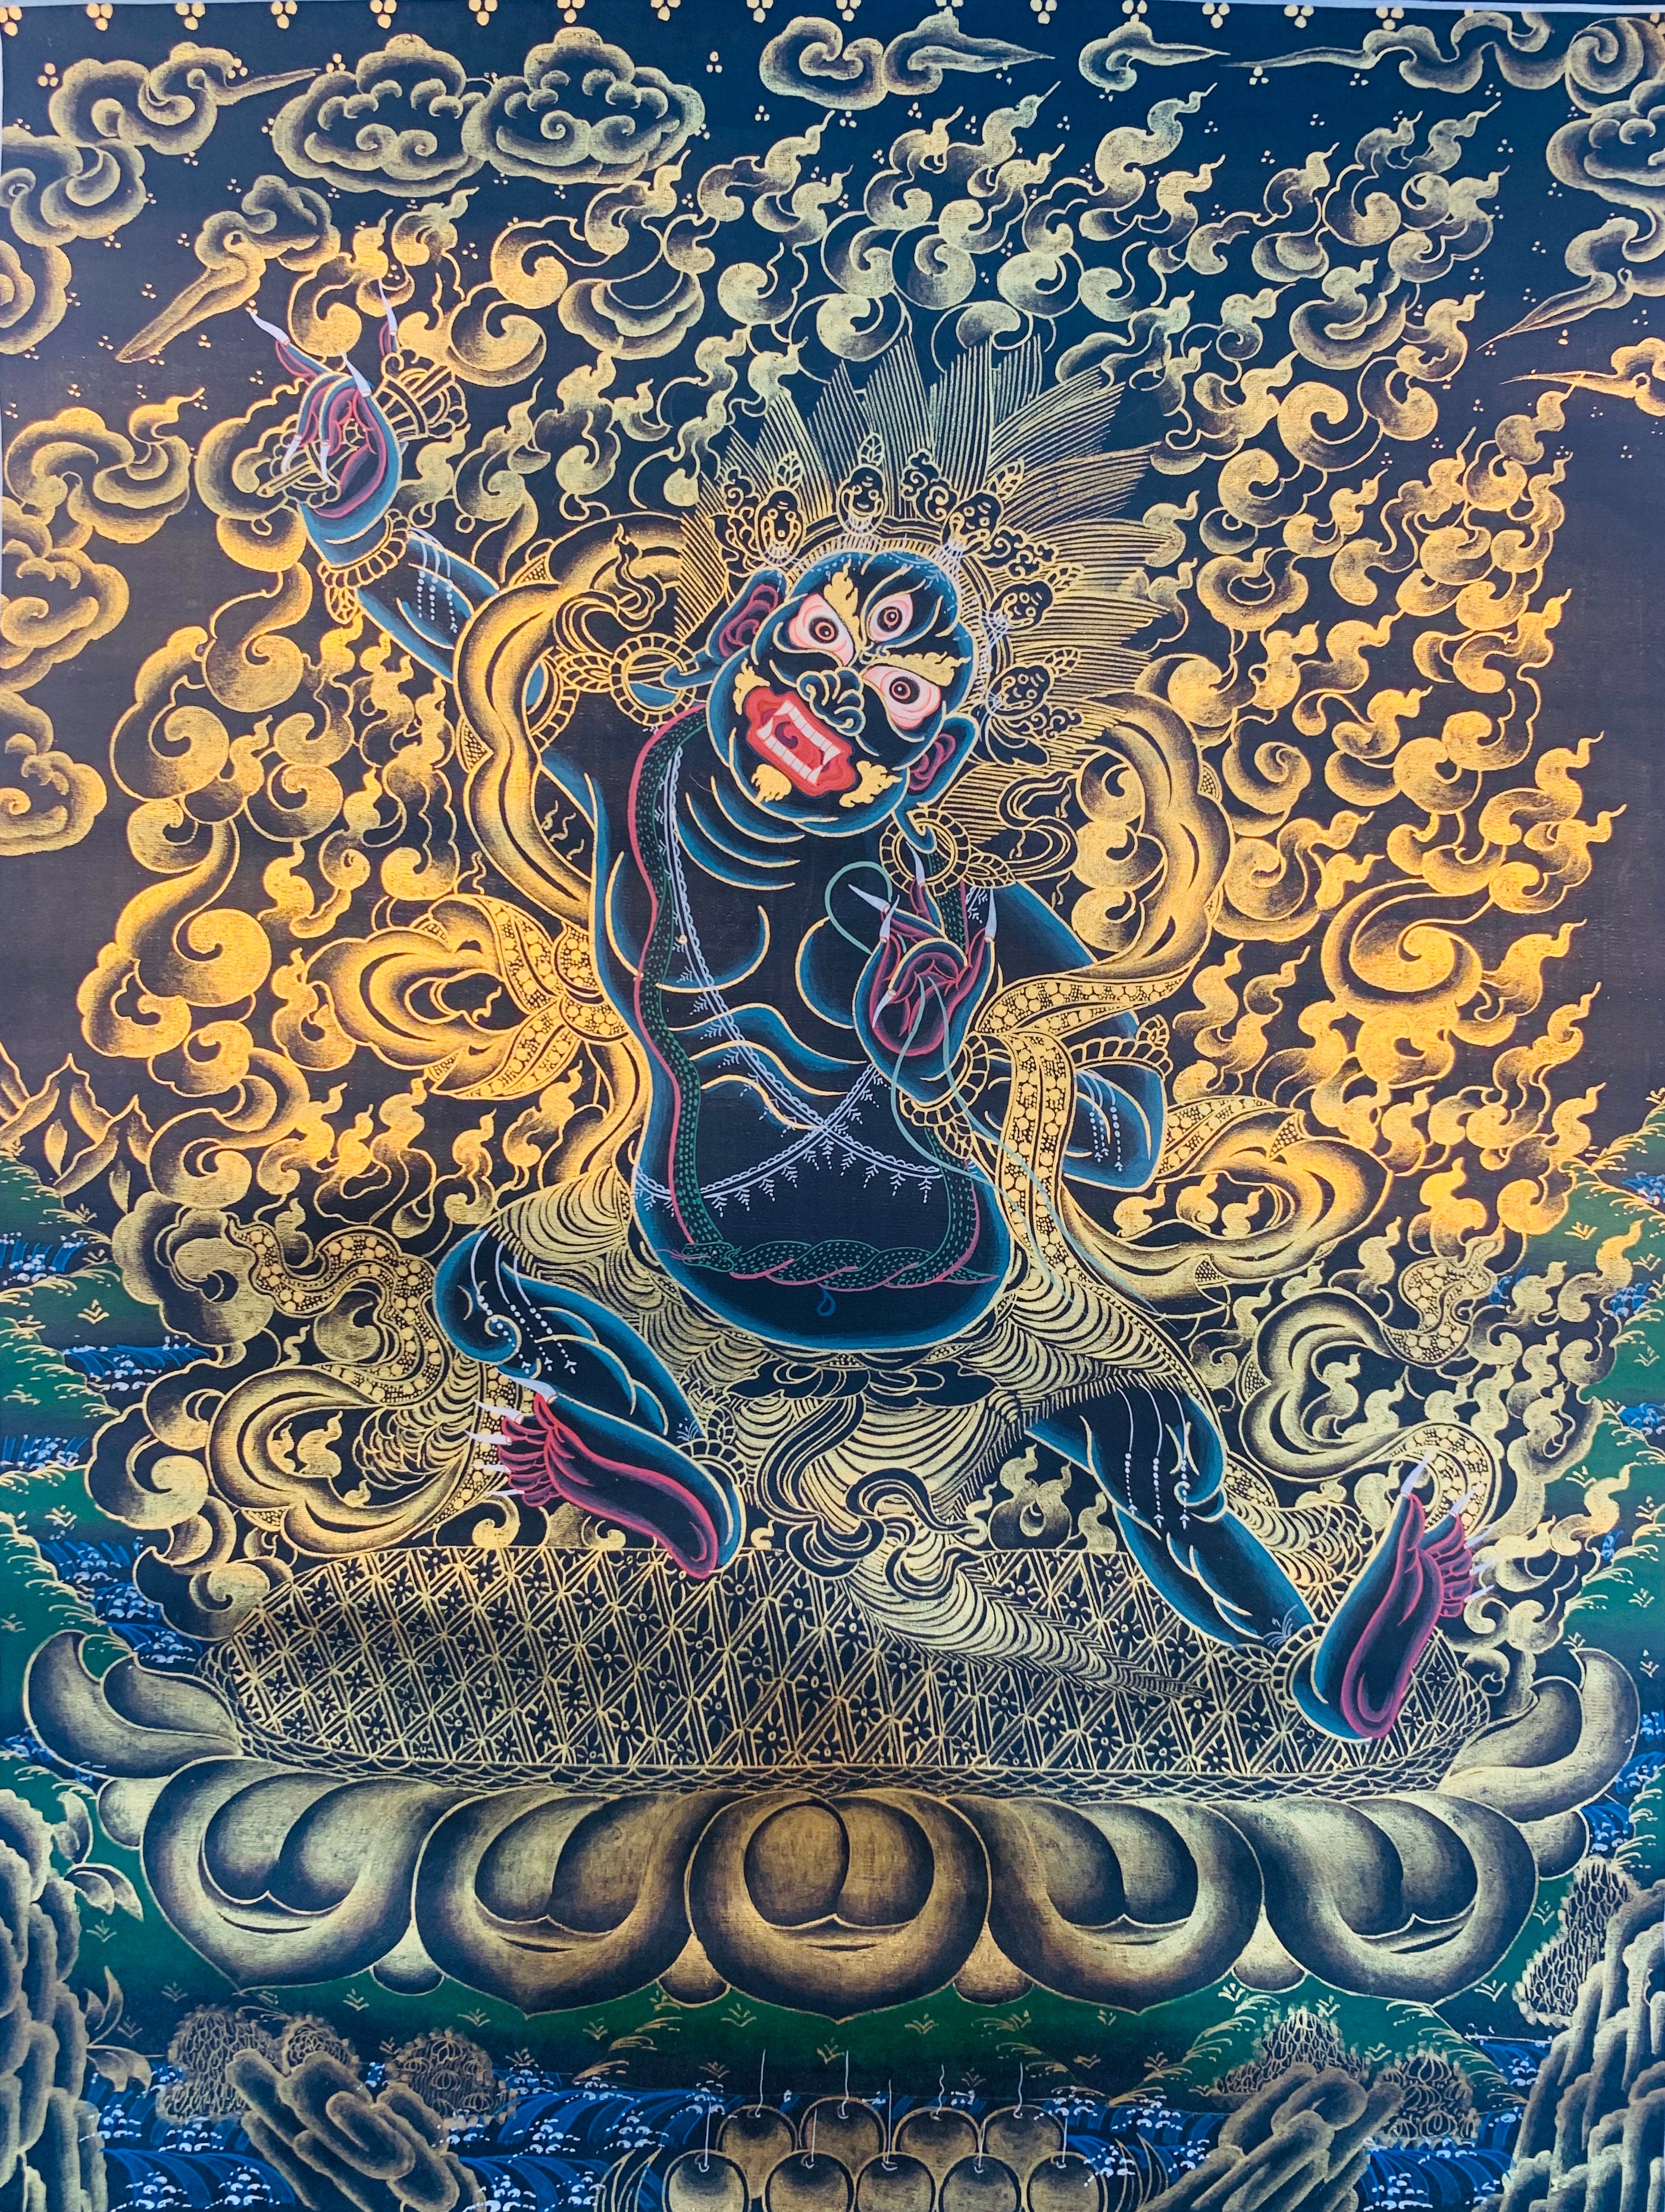 Wrathful Deity Vajrapani Thangka Painting 50*40 - The Thangka